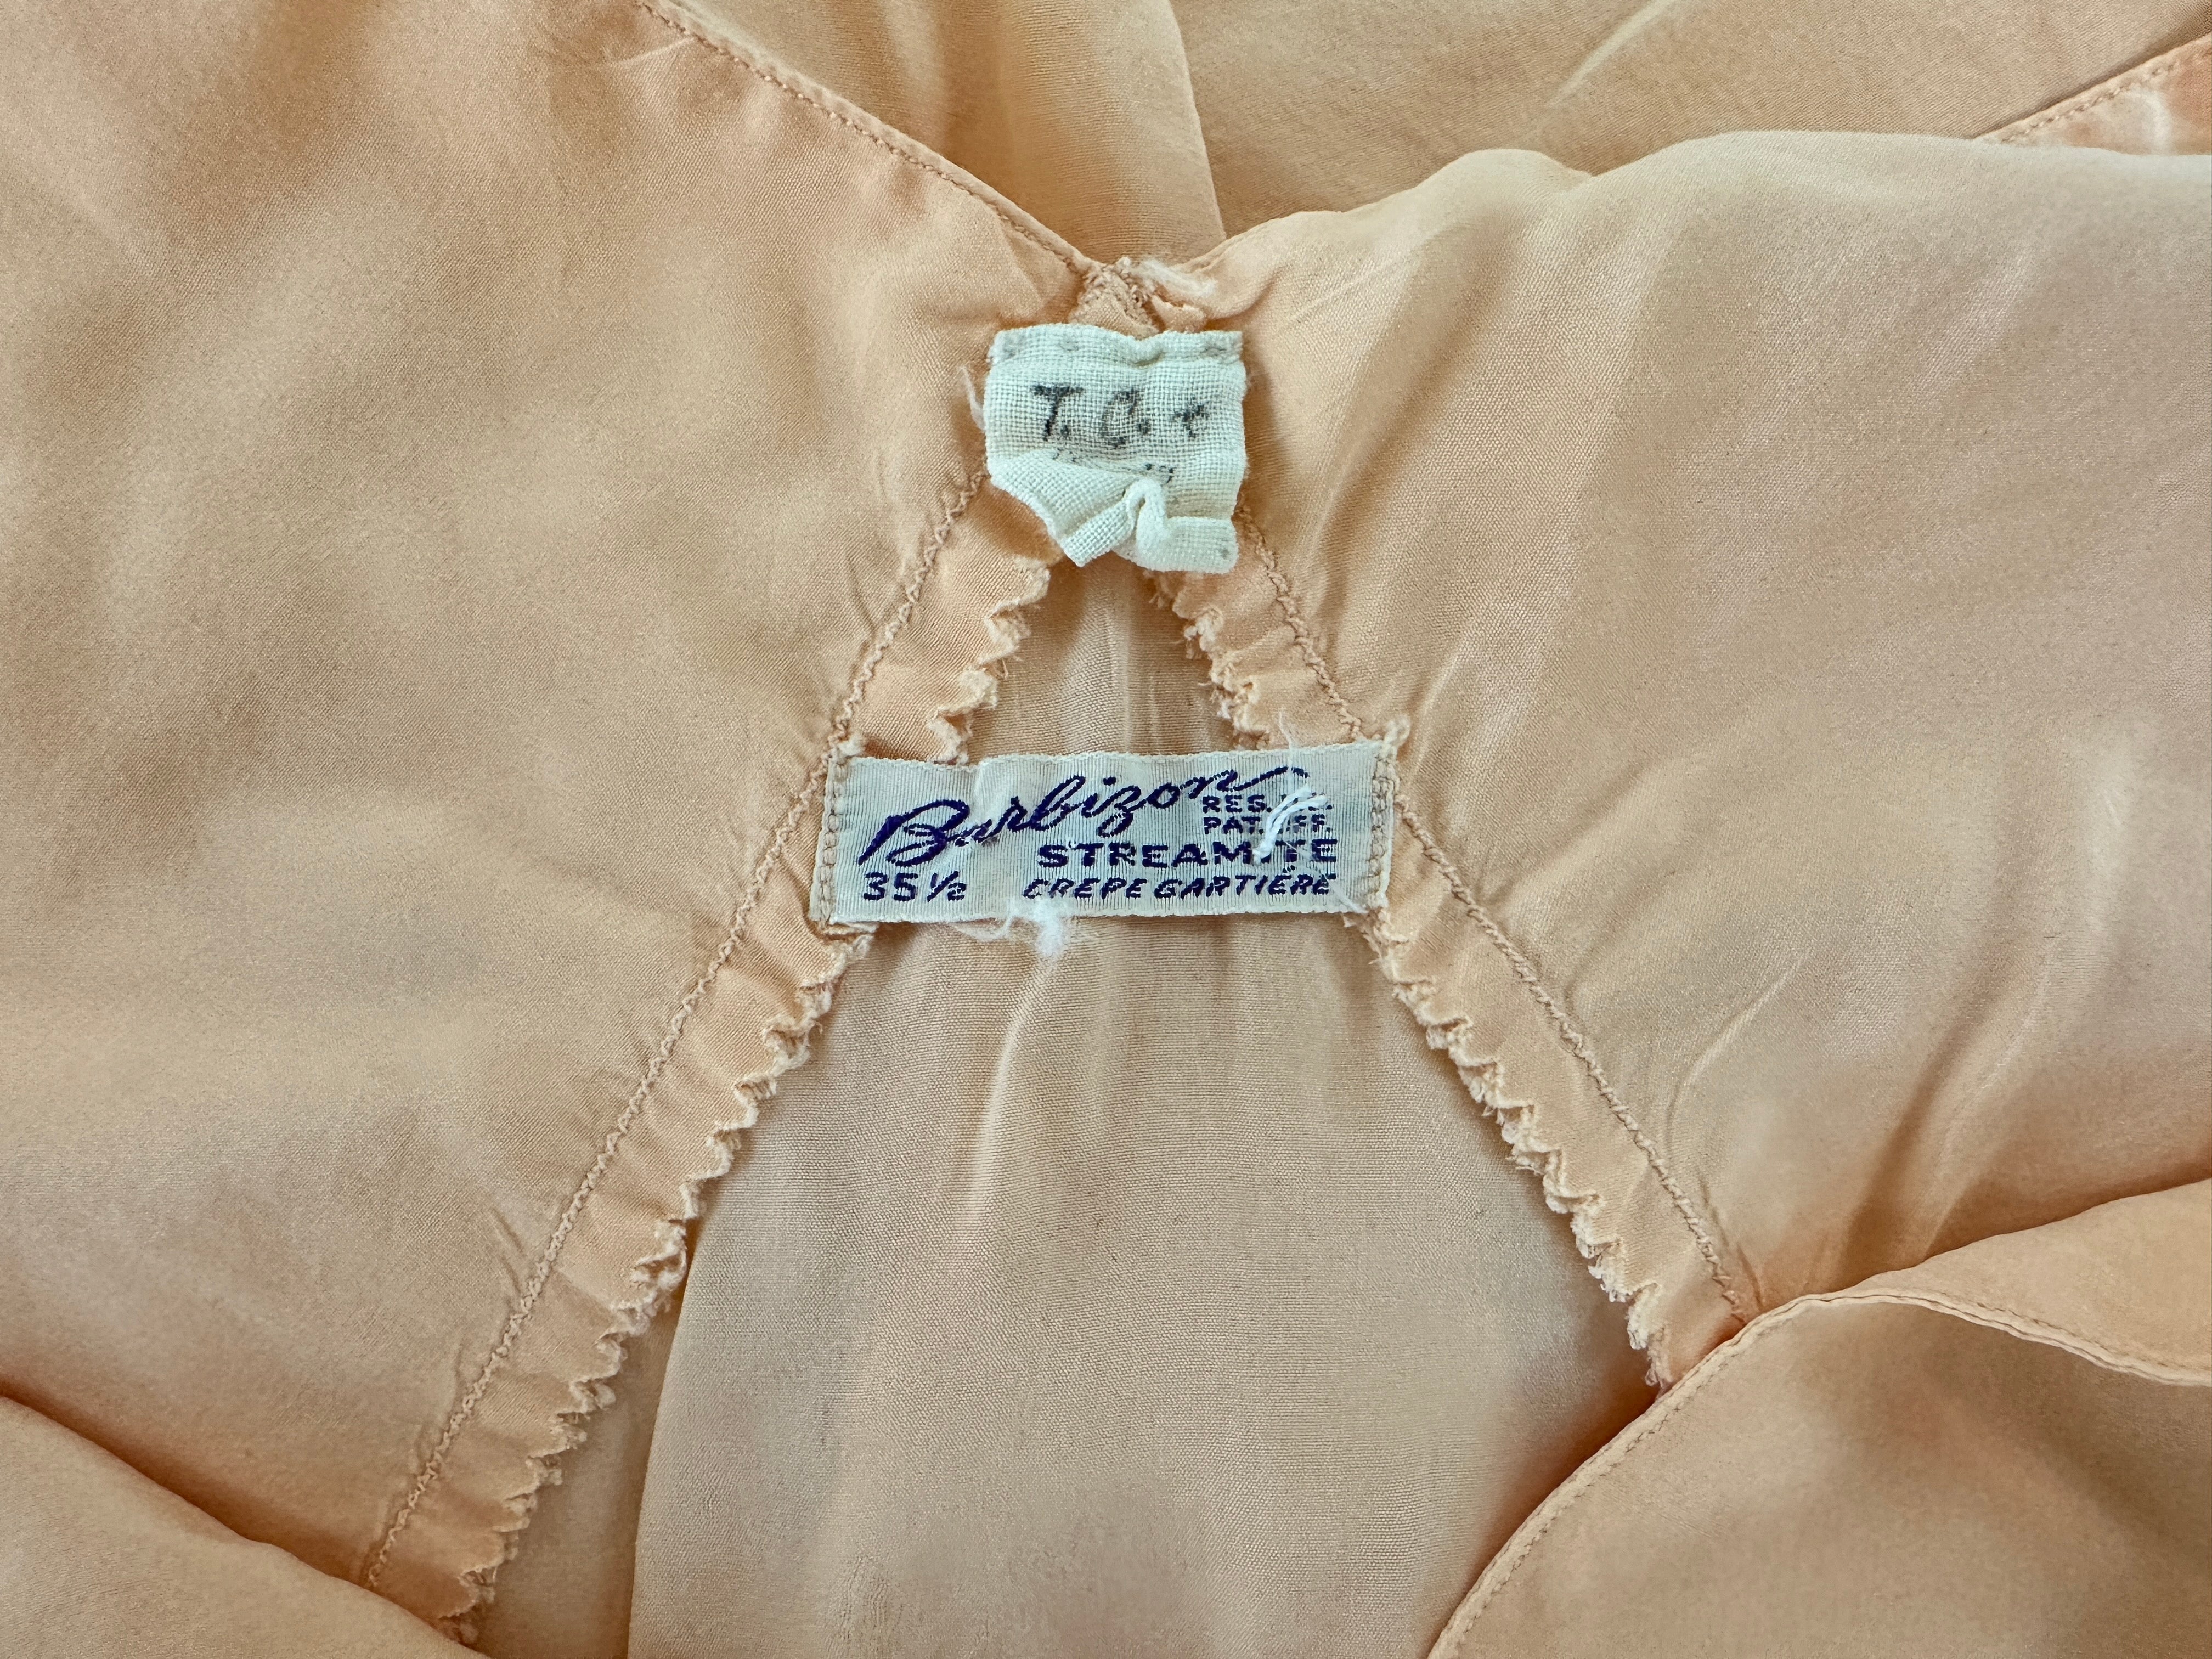 Vintage Barbizon Peach Streamite Slip Dress Women's Size 35 1/2